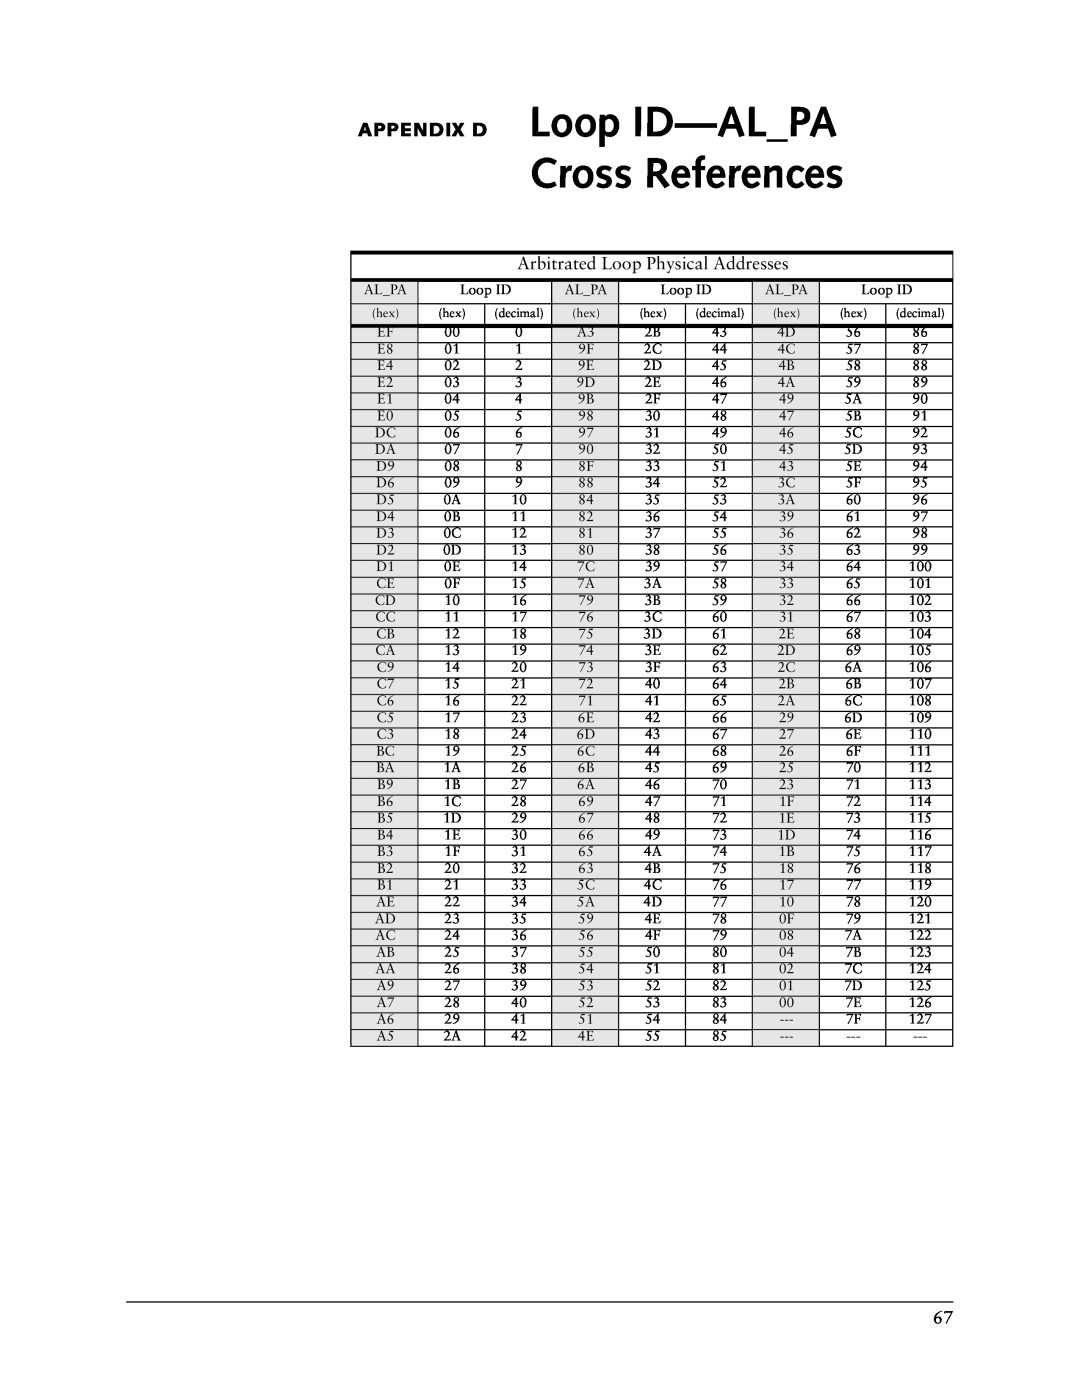 Vixel 335 manual Cross References, Loop ID-ALPA, Appendix D, Arbitrated Loop Physical Addresses 